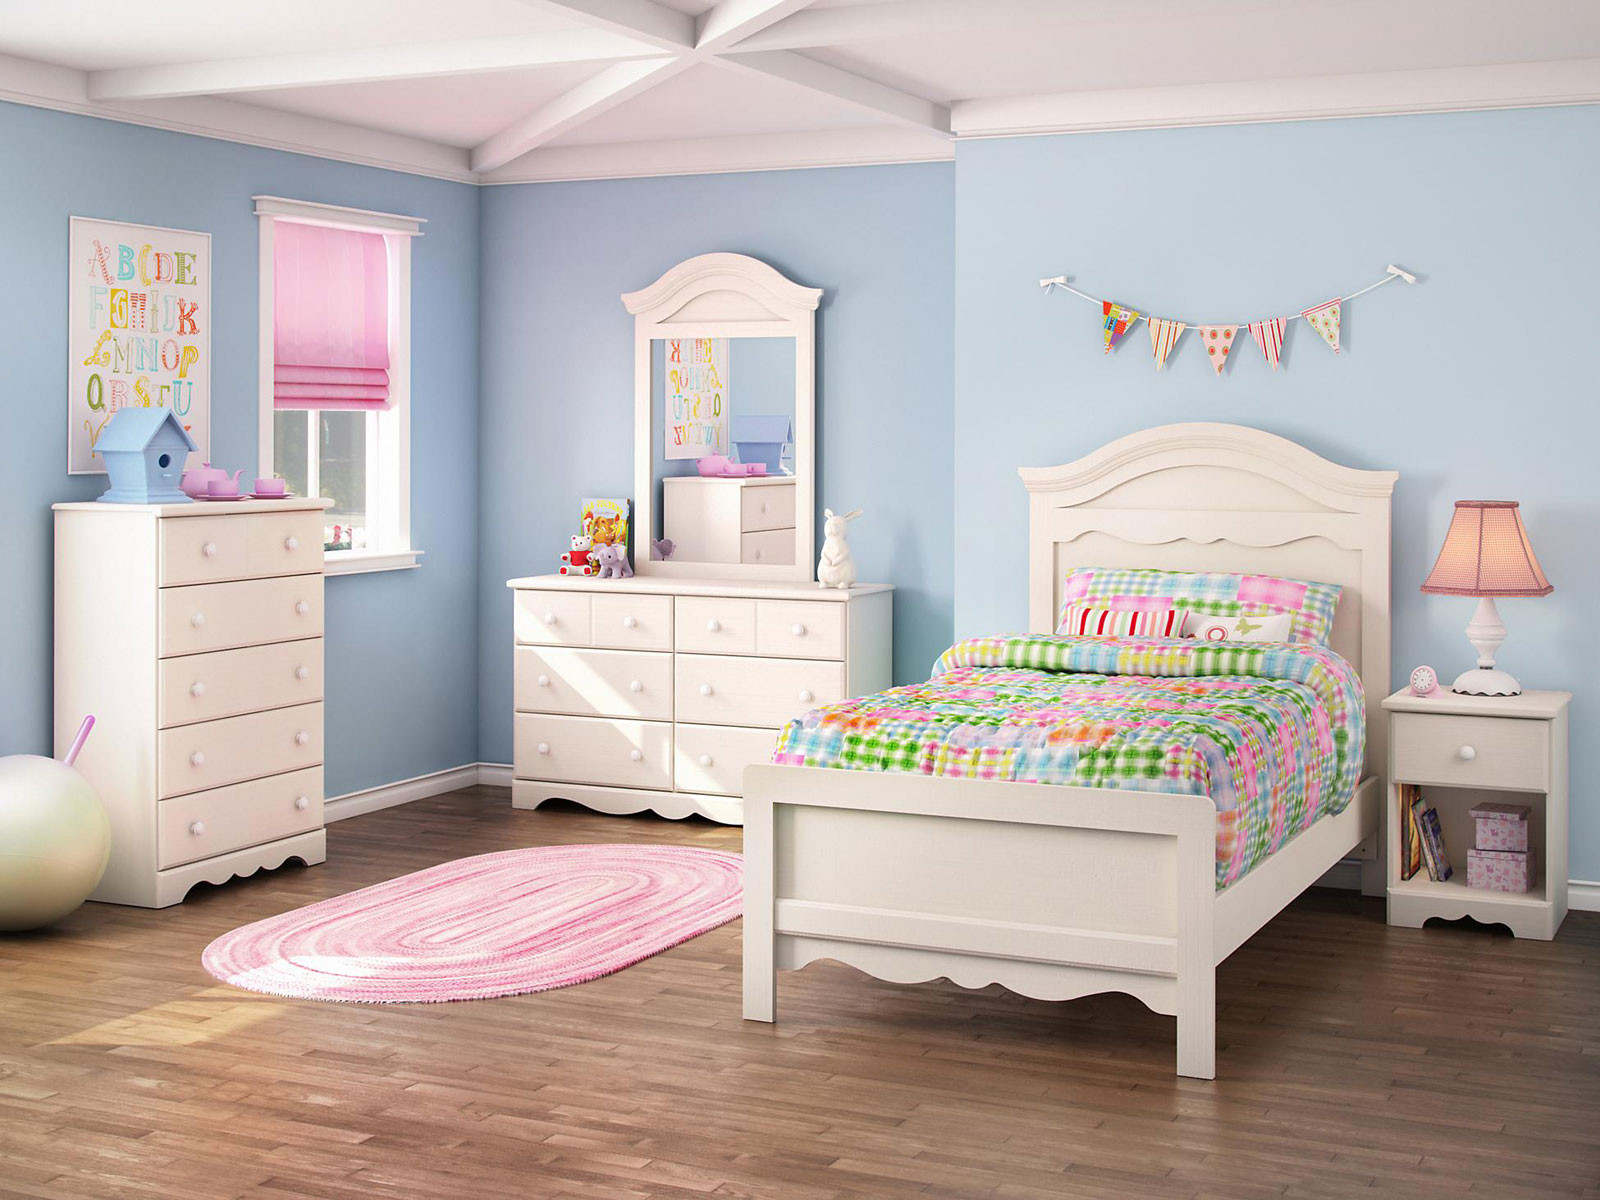 Girls White Bedroom Furniture Set
 Girls Bedroom Sets bining The Cute Aspects Amaza Design